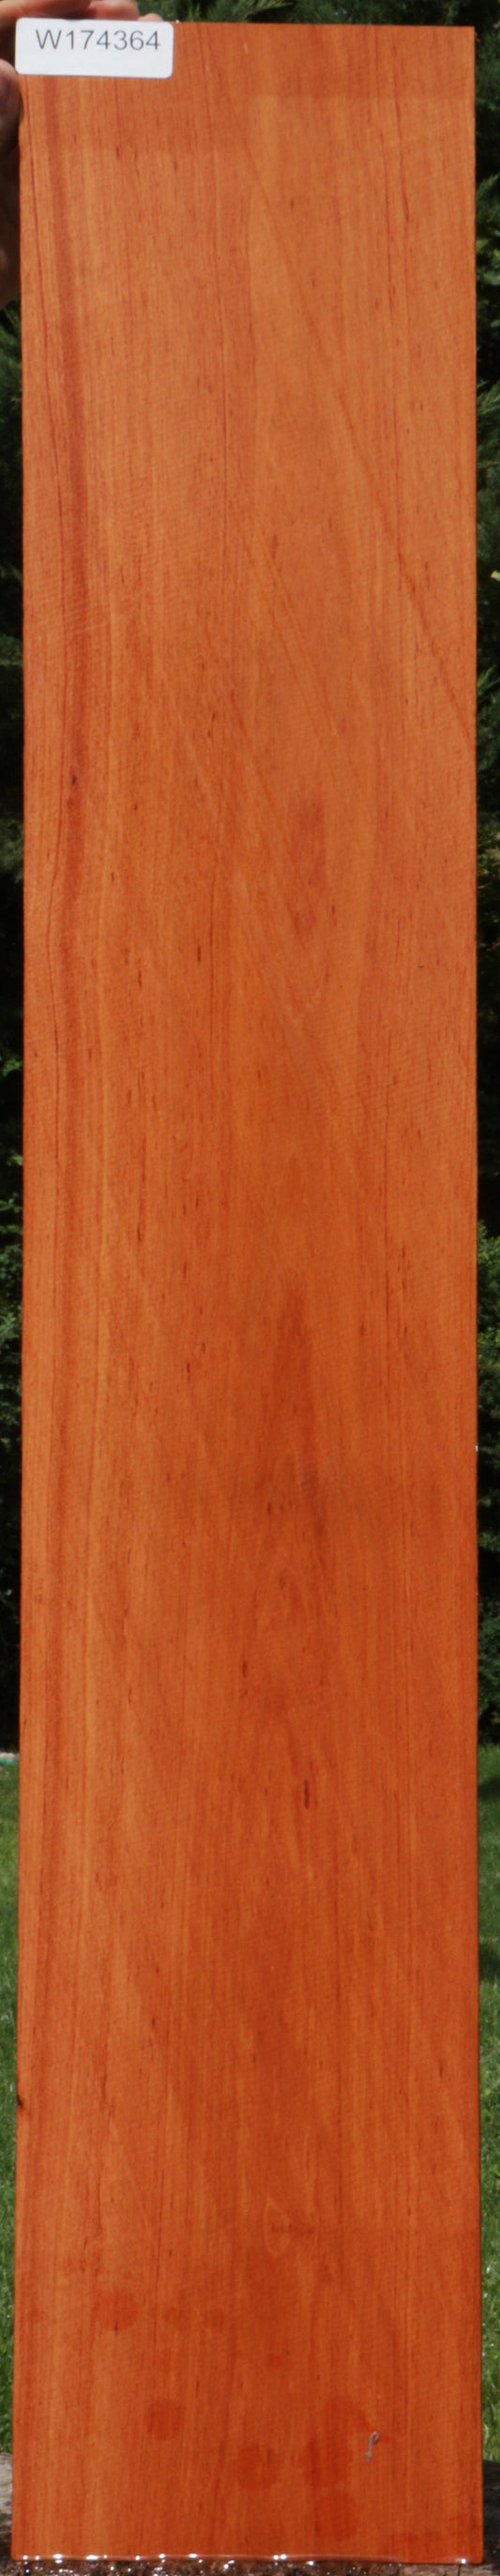 Rosita Lumber